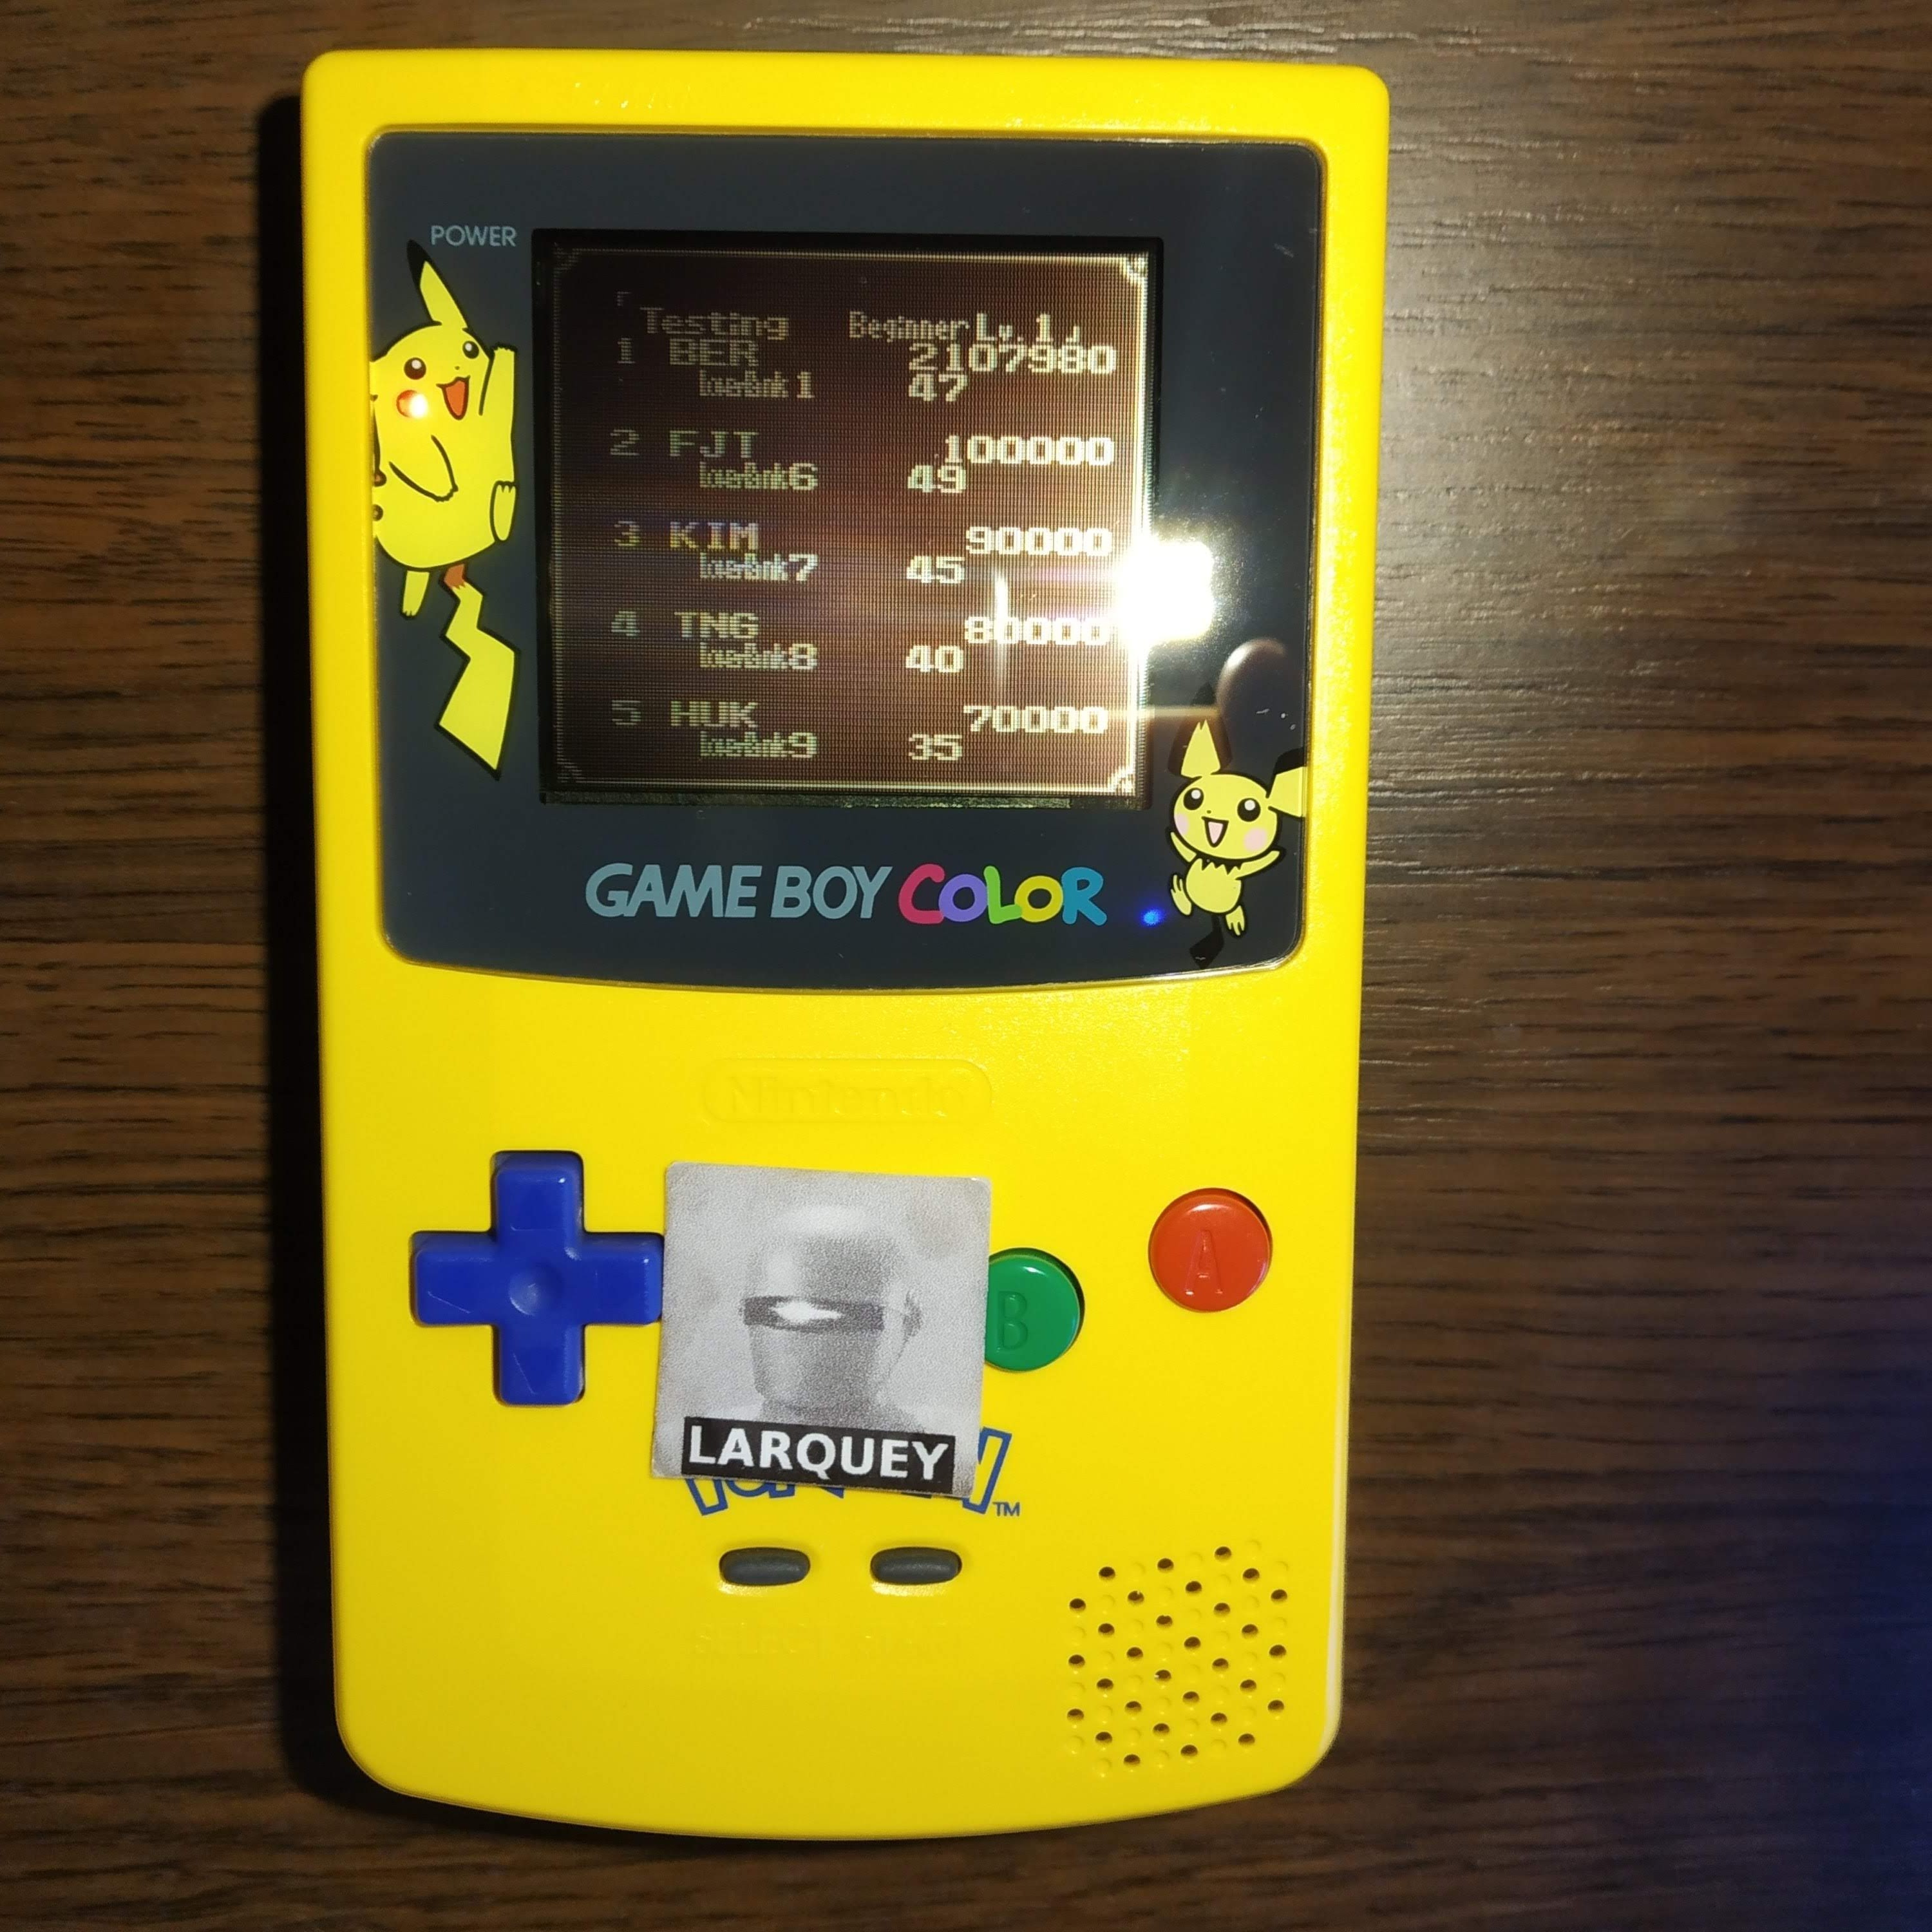 Larquey: Puchi Carat (Game Boy Color) 2,107,980 points on 2020-07-12 02:12:39